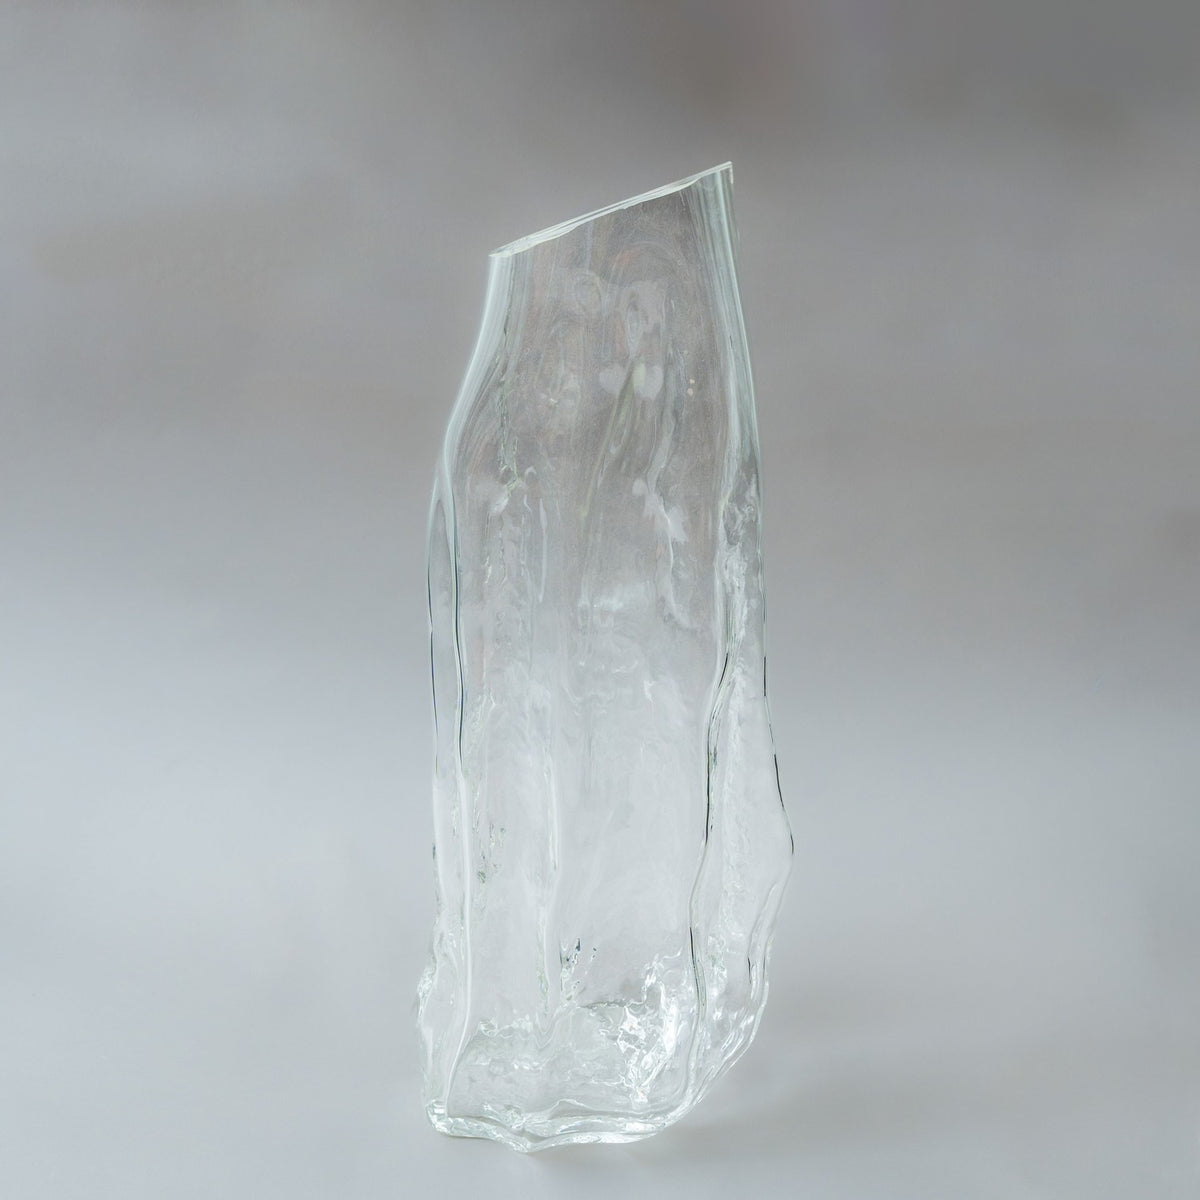 Liam Fleming - Sculptural Glass Decanter